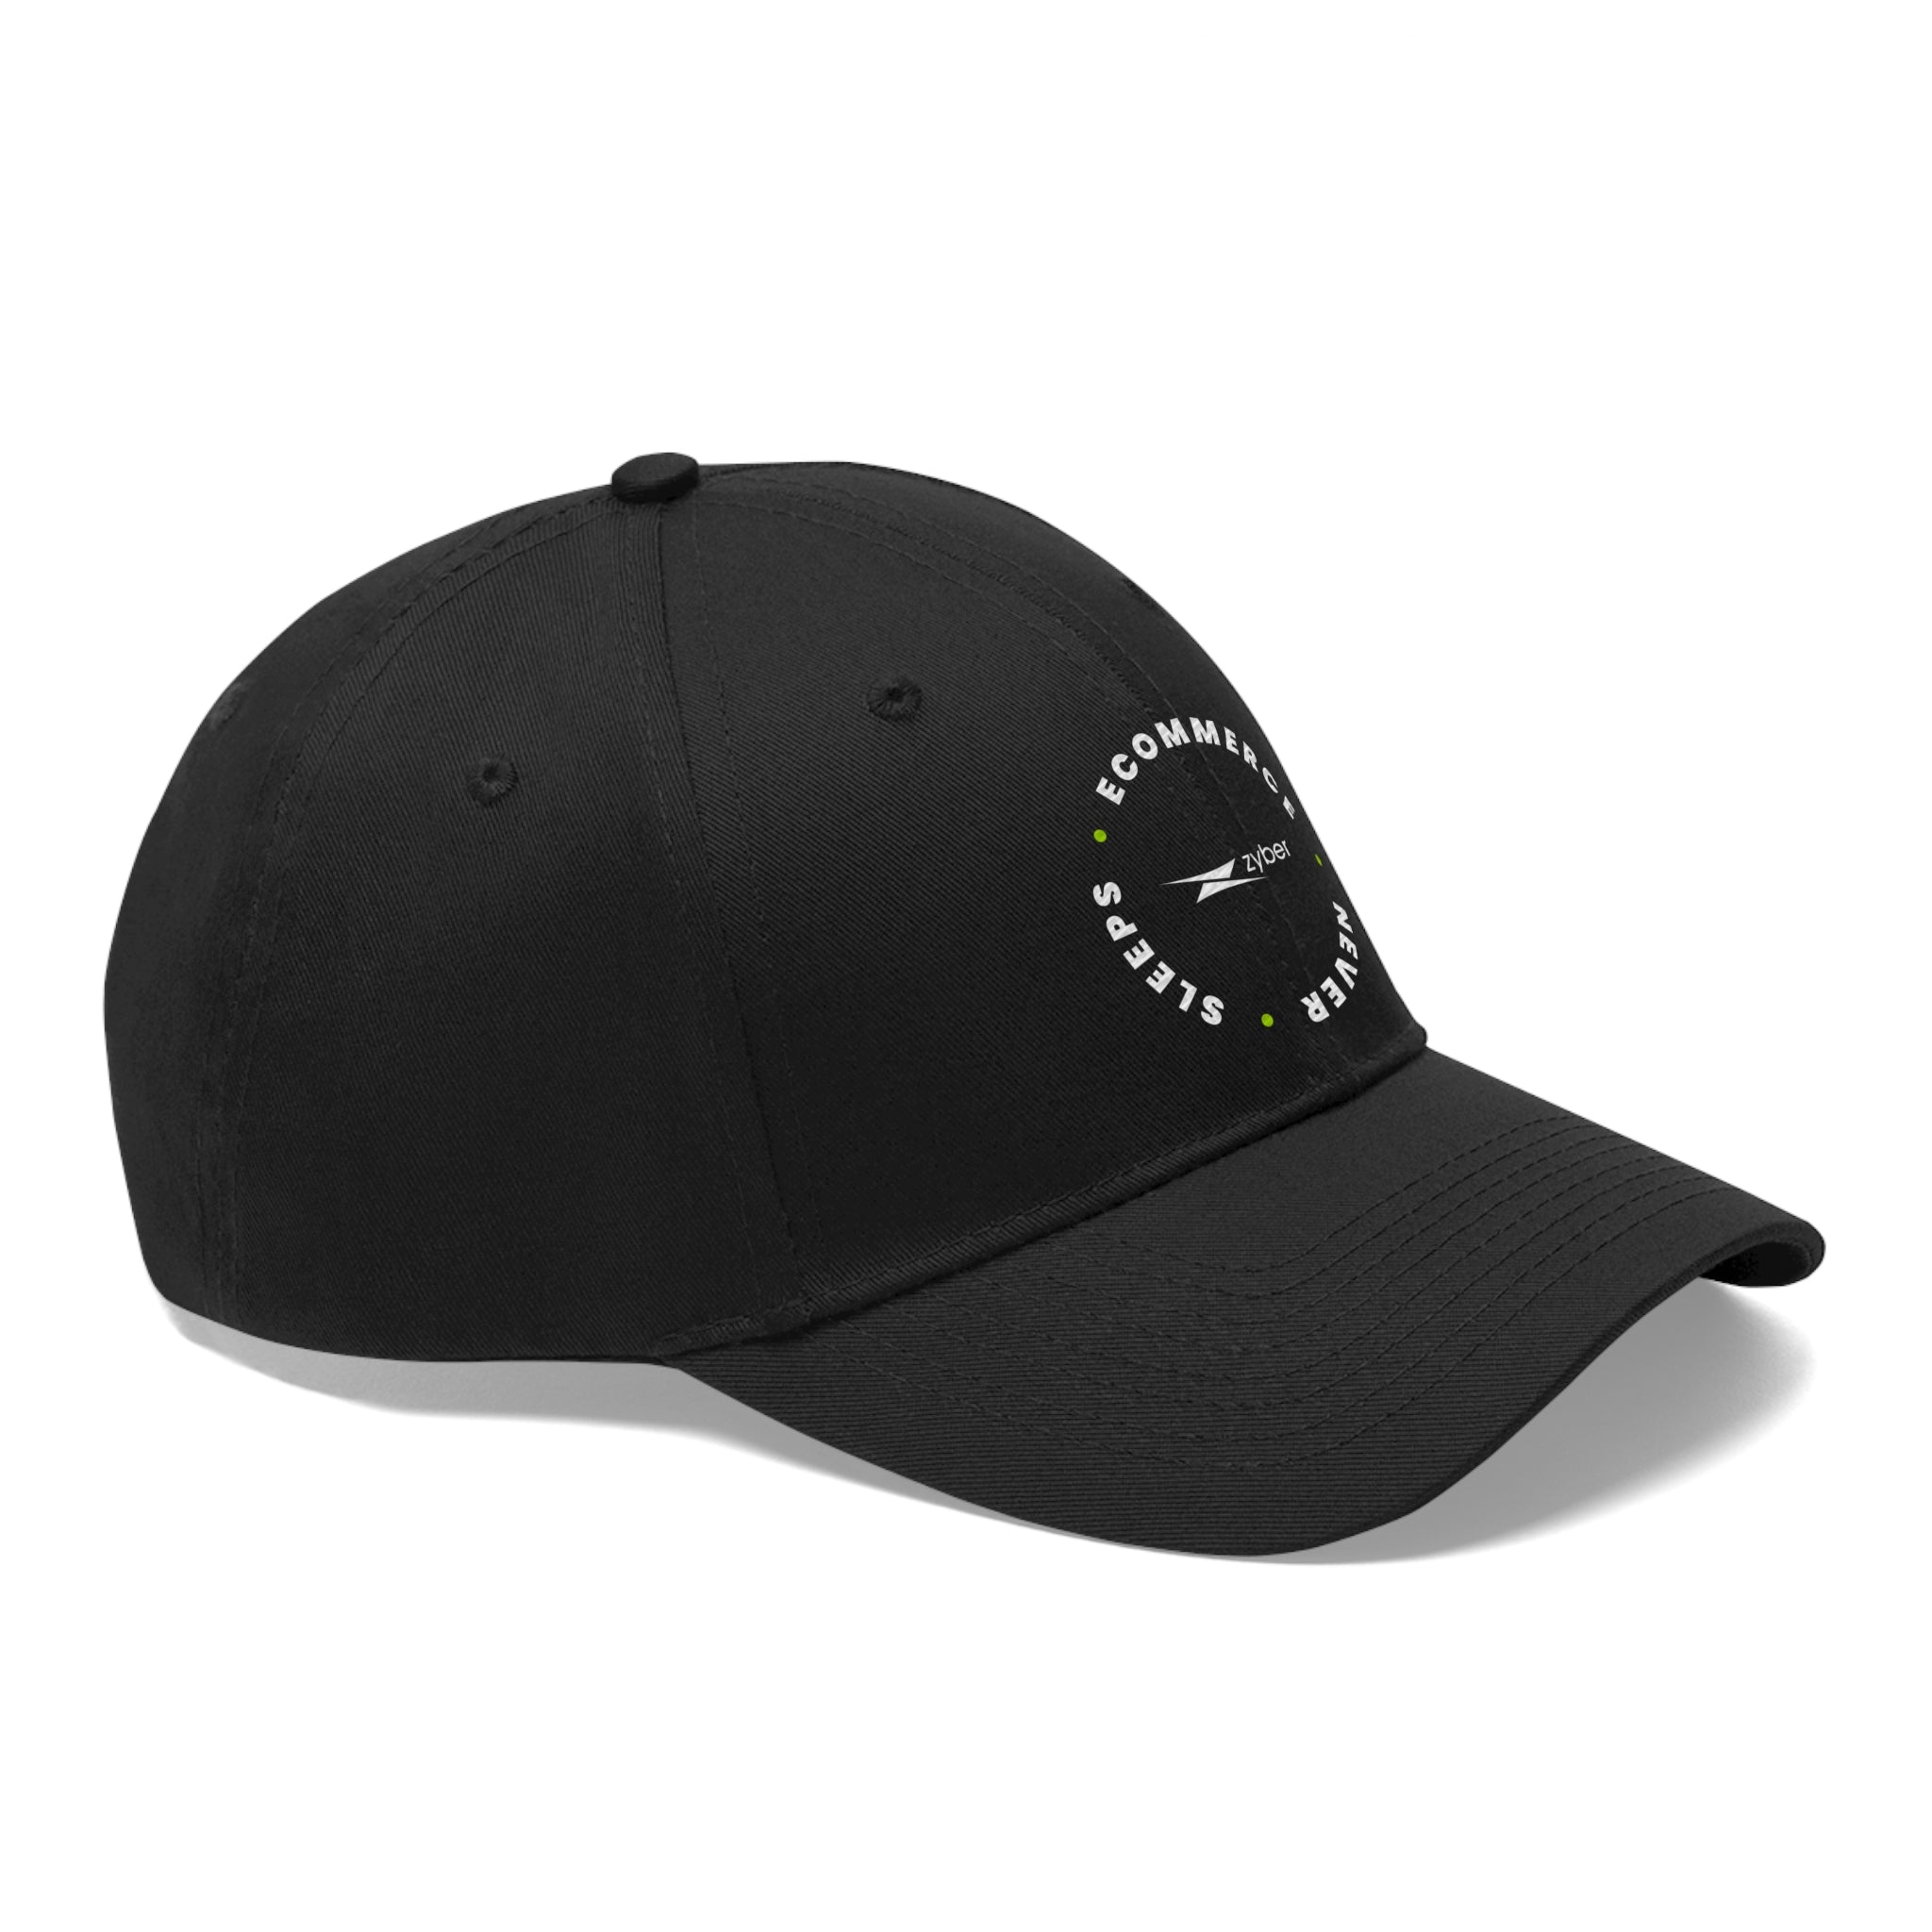 eCommerce never sleeps zyber logo hat